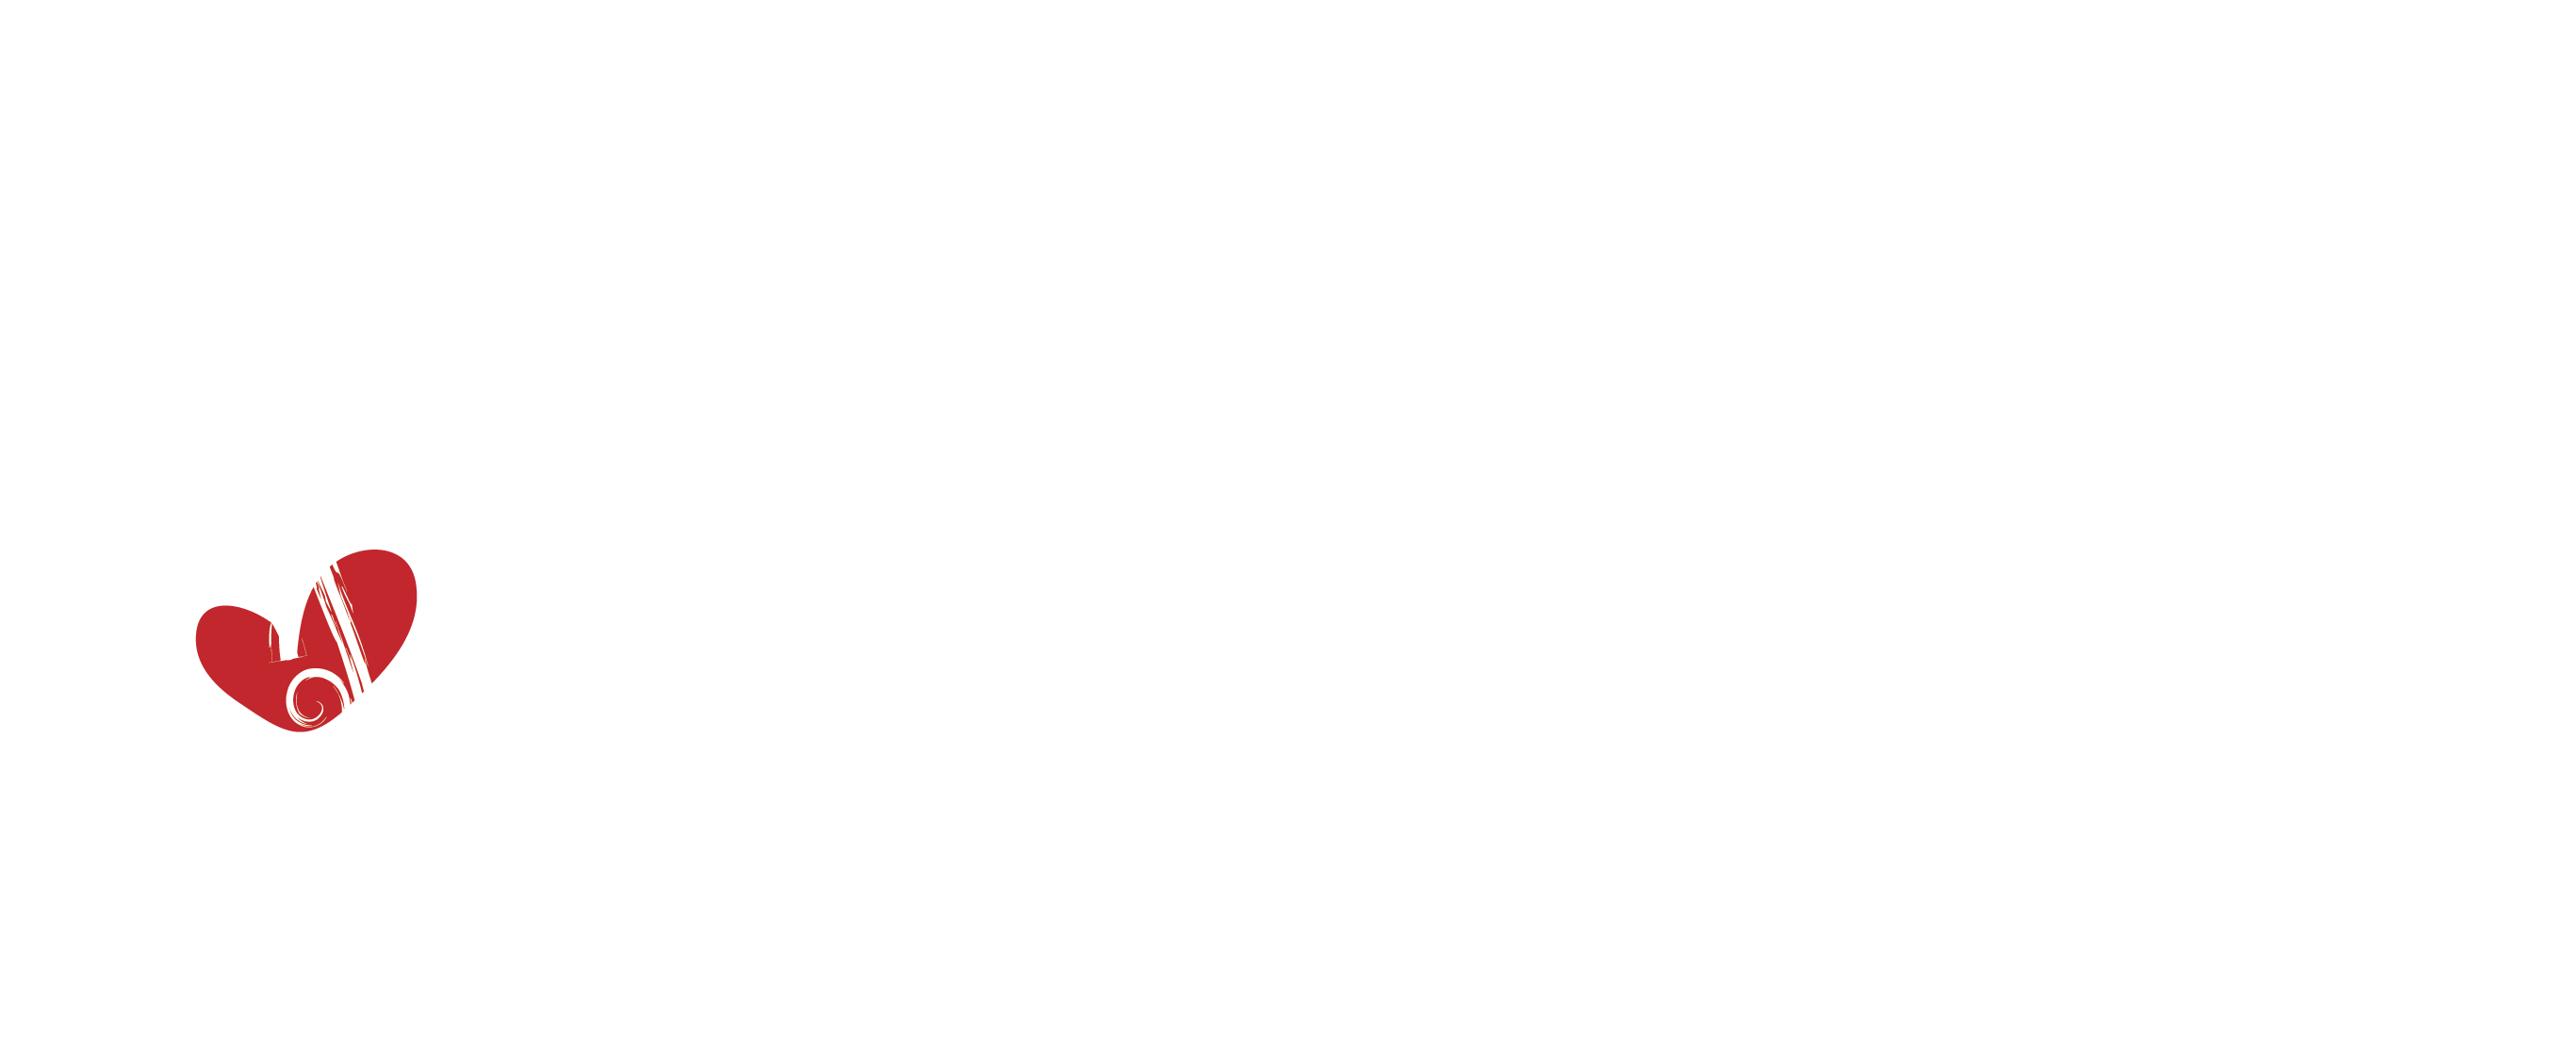 The Little London Winds